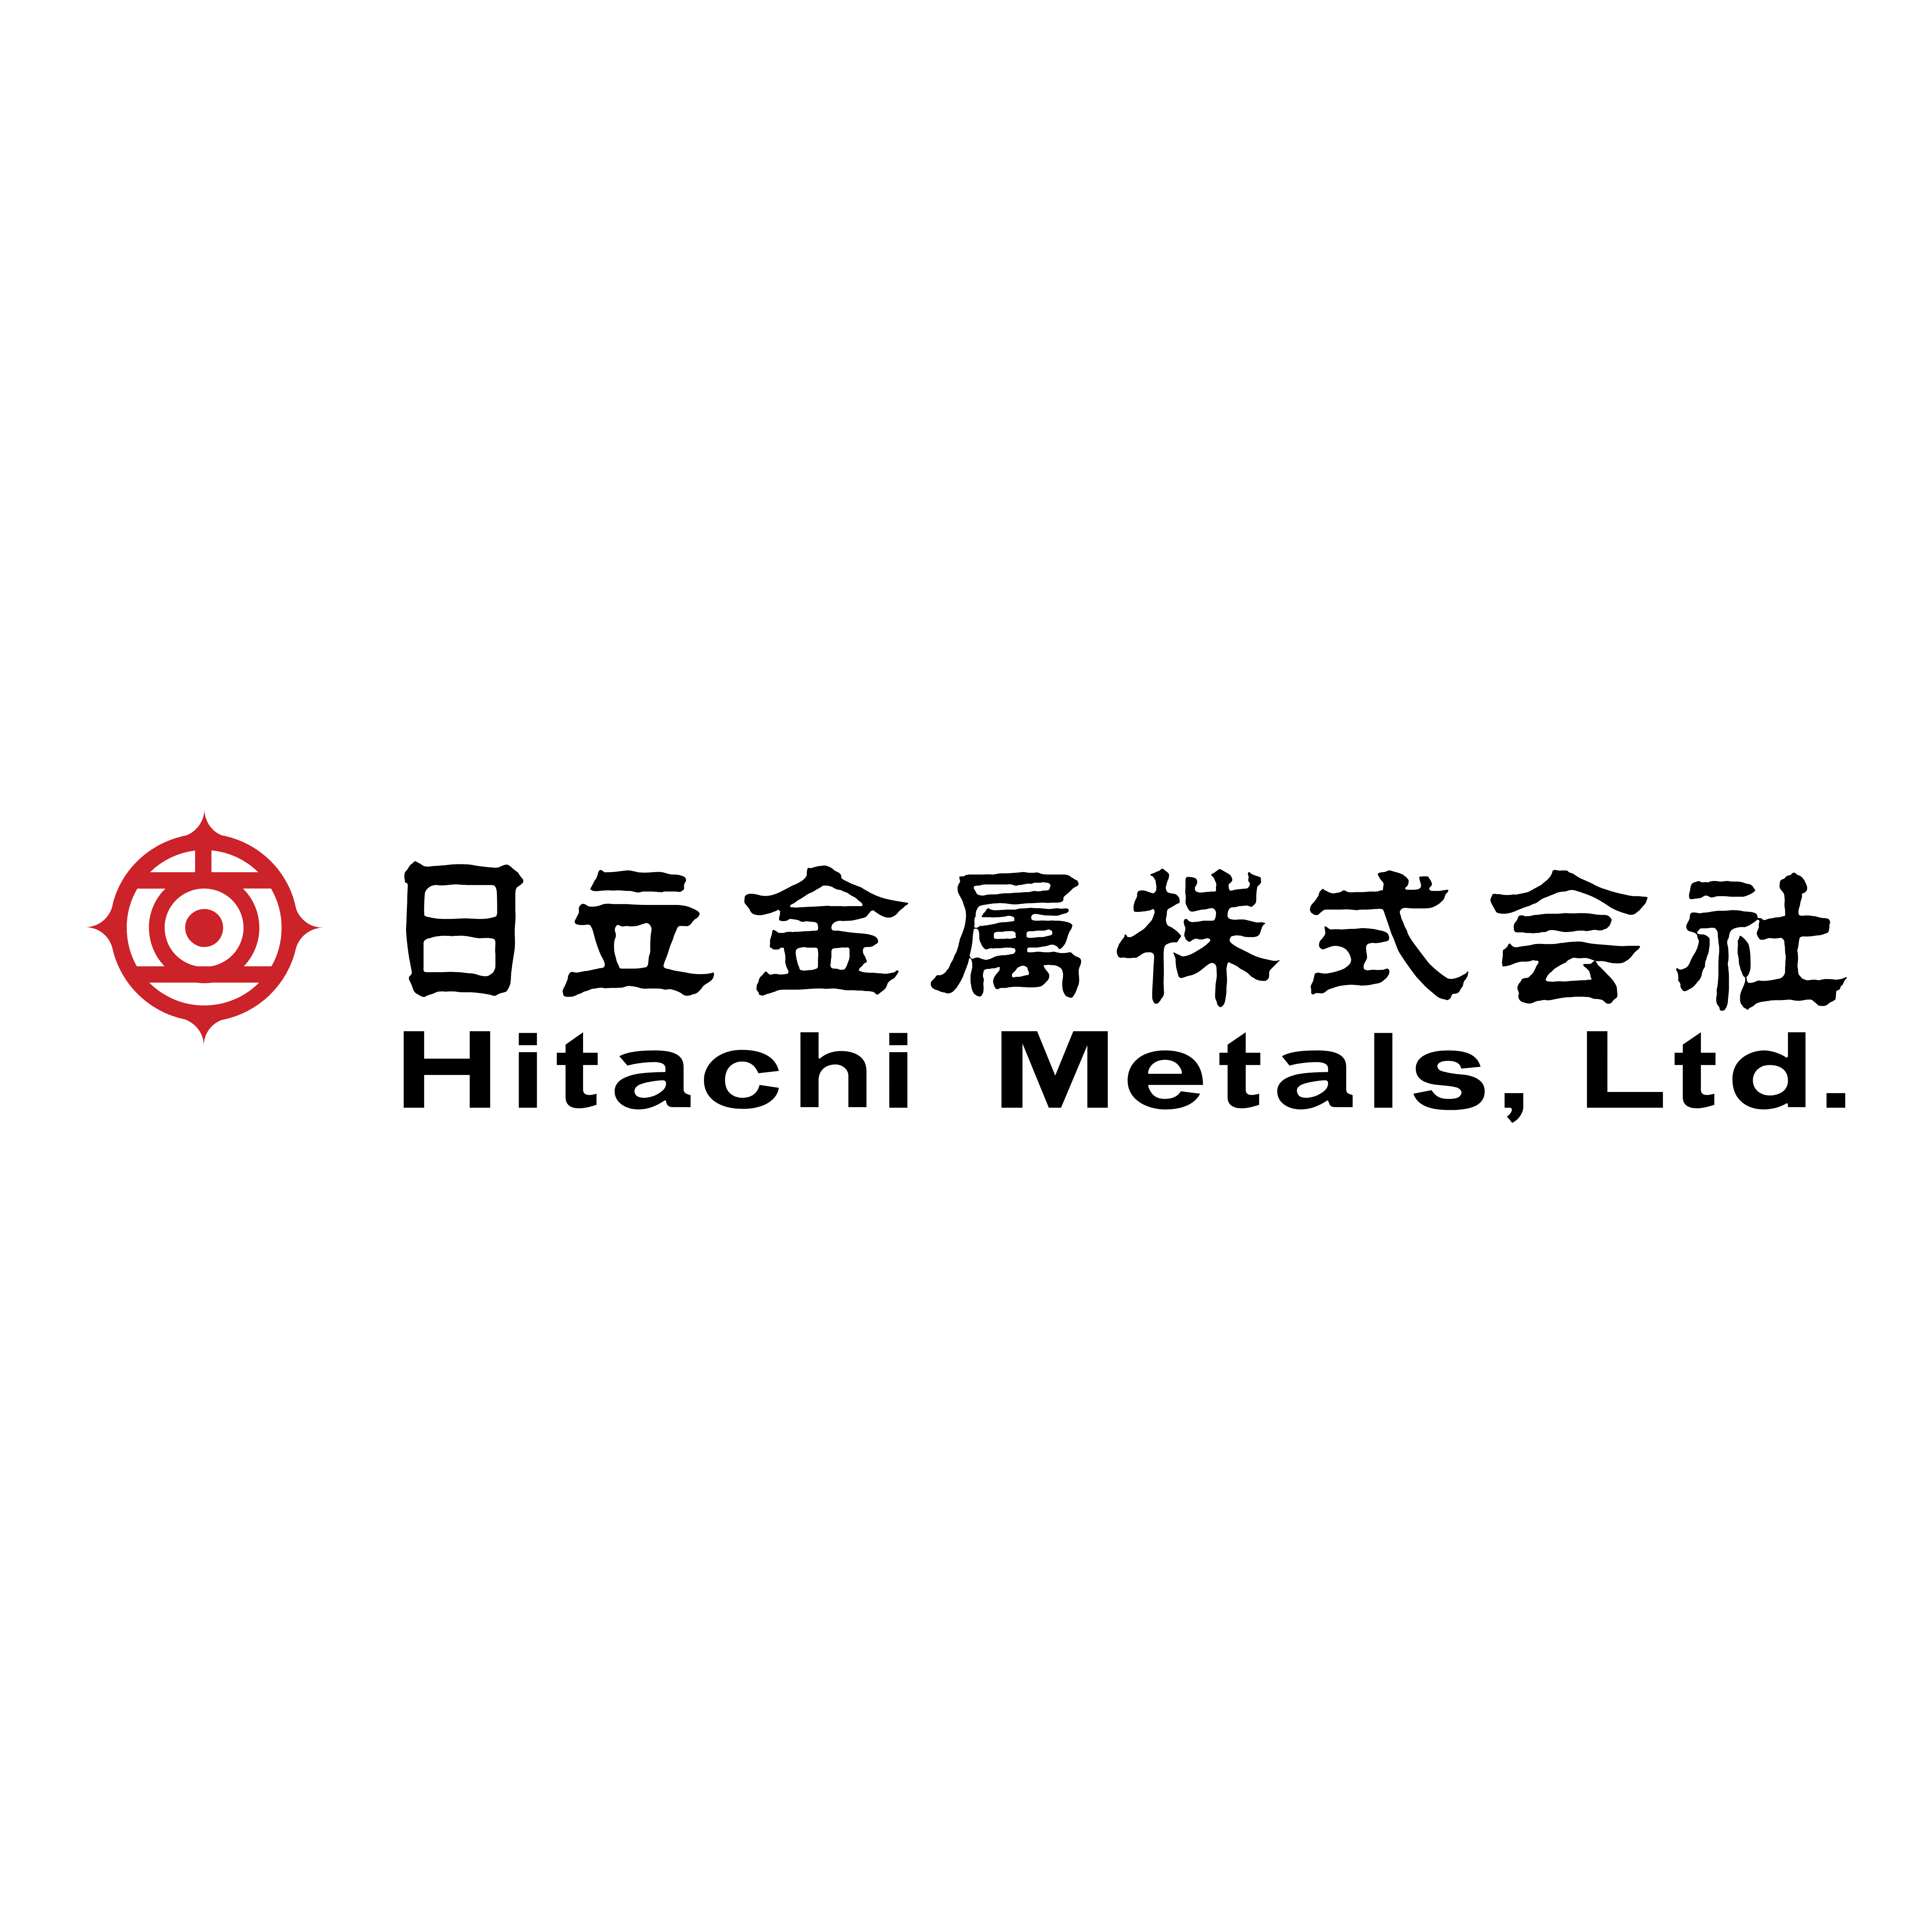 Hitachi Logo PNG - 176396